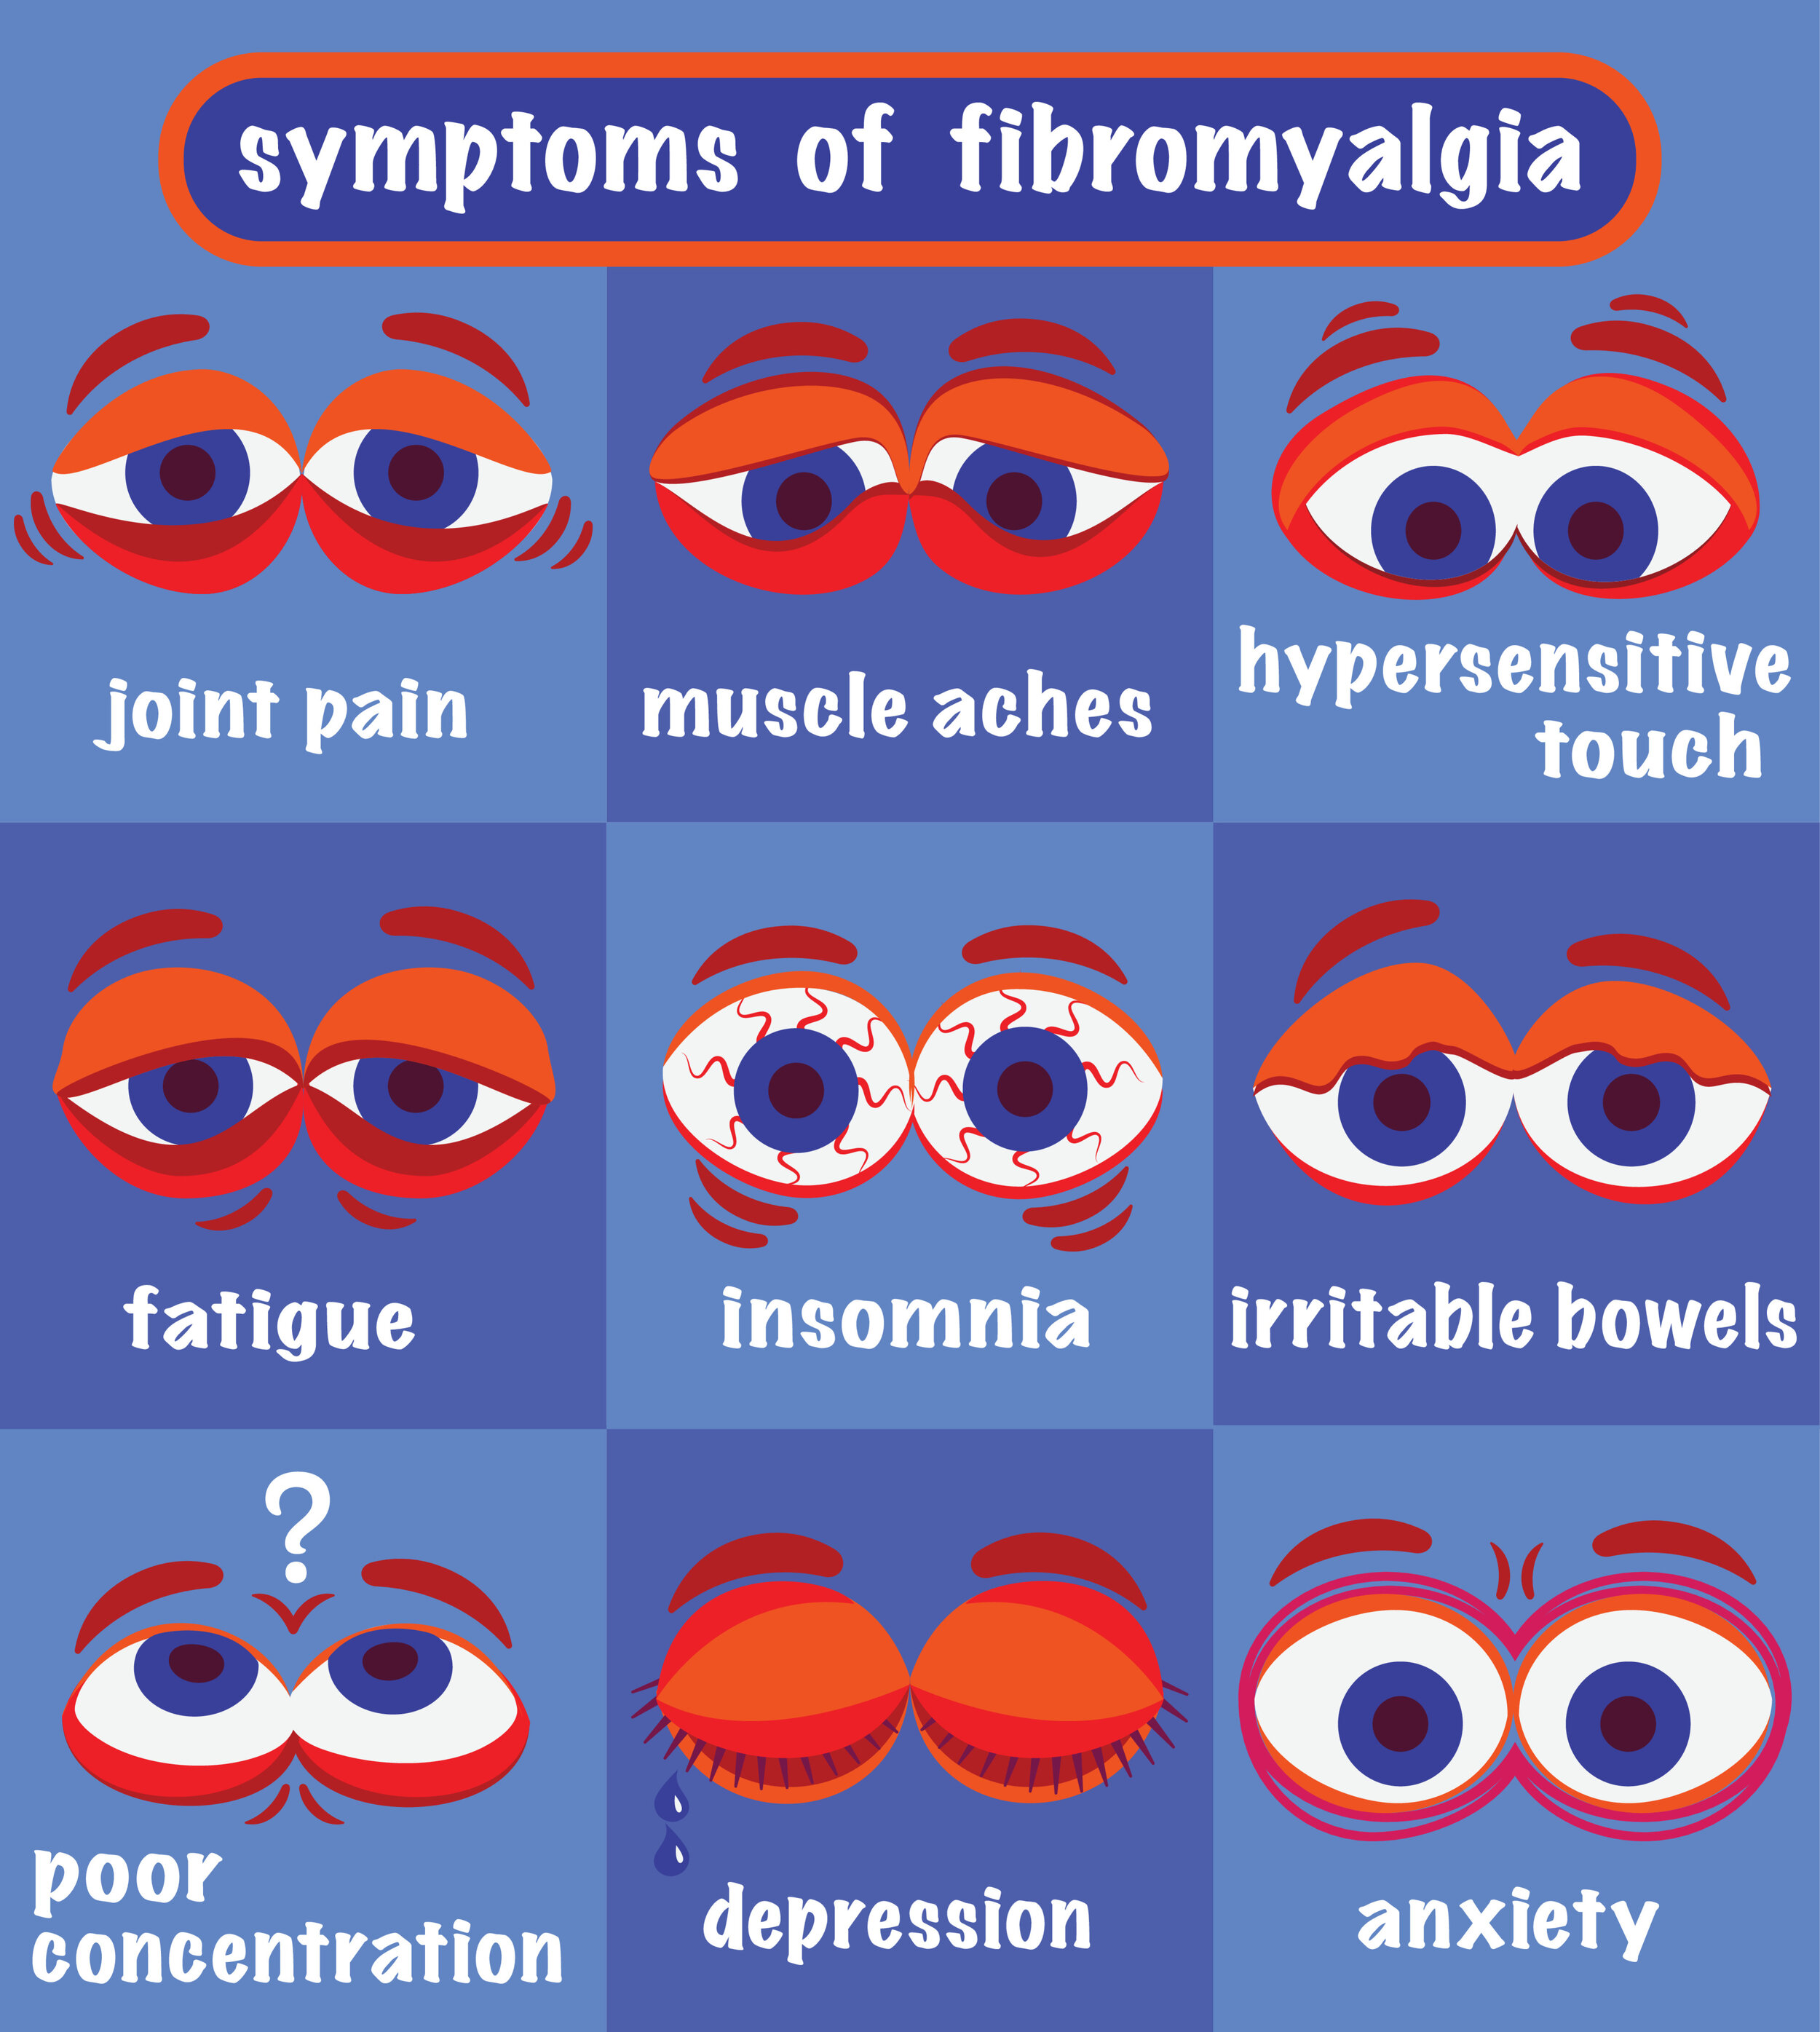 Fibromyalgia symptoms.jpeg